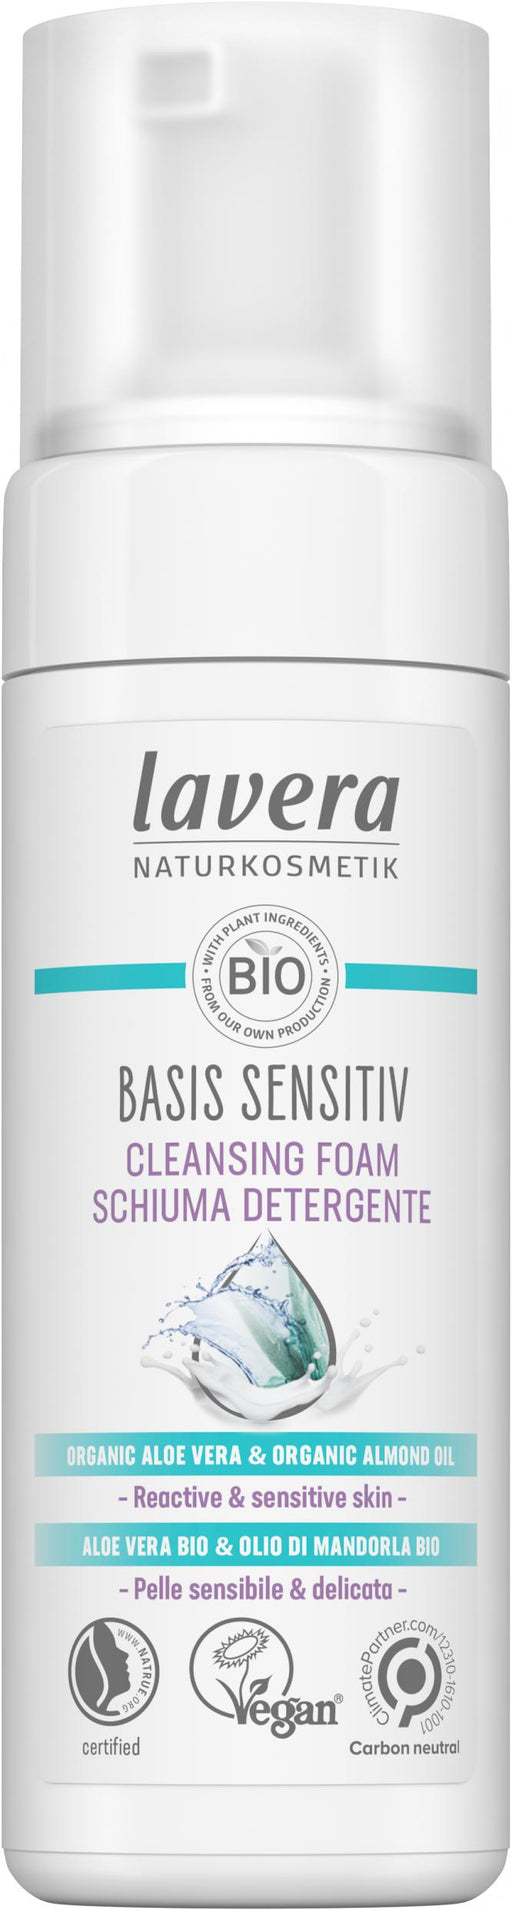 Lavera Basis Sensitiv Cleansing Foam 150ml - Dennis the Chemist